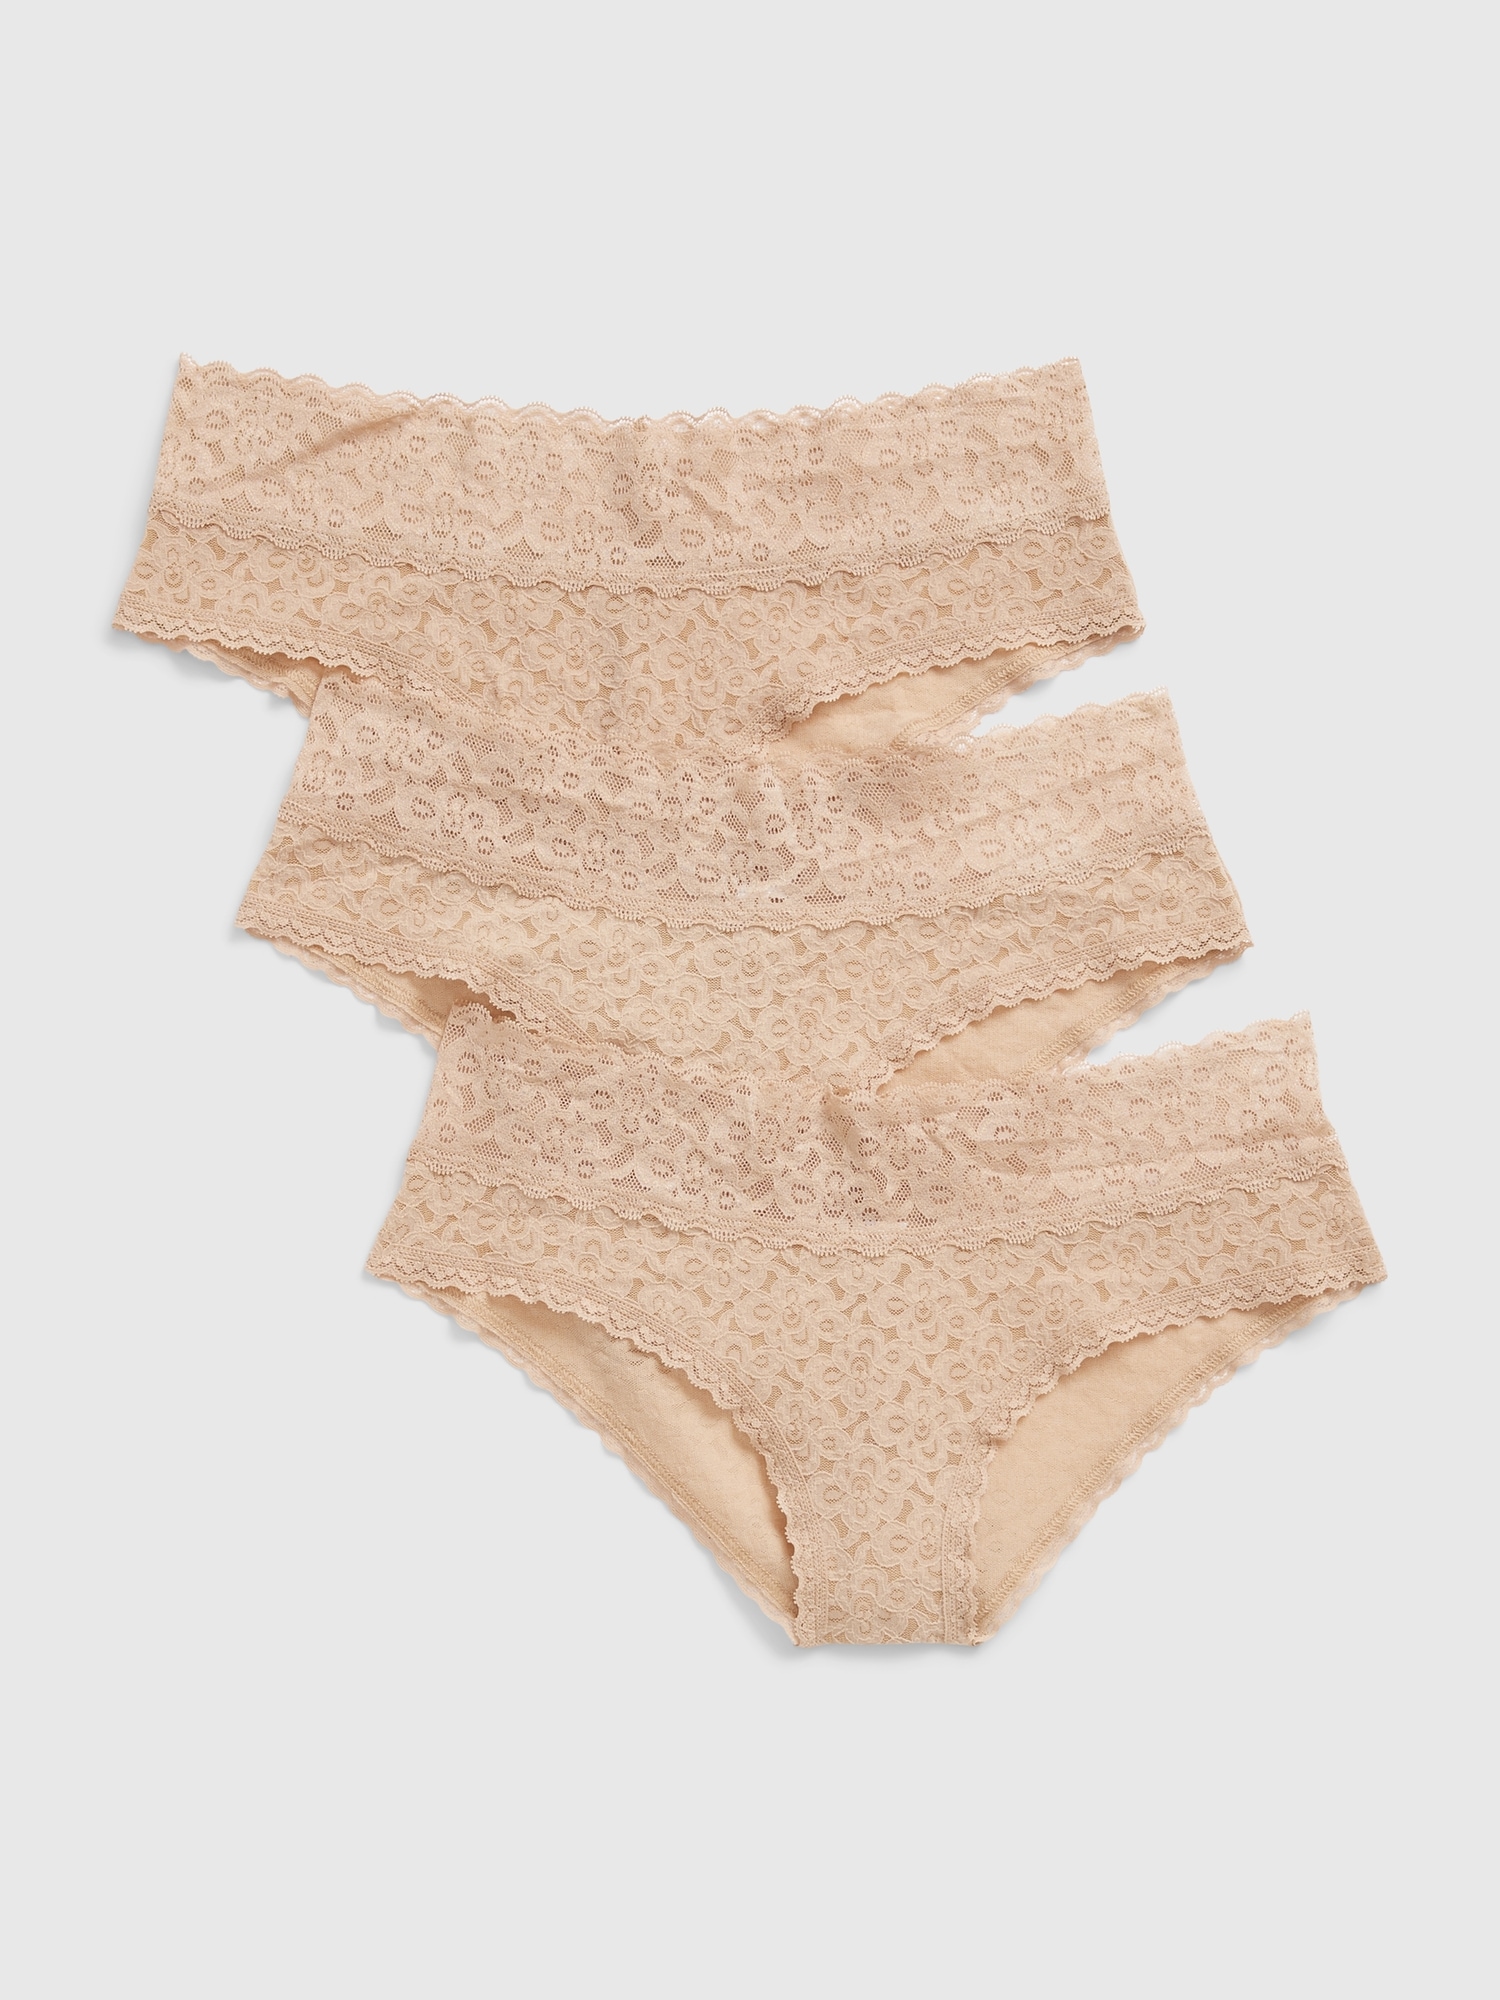 1-3PC Solid Color V Cut Briefs Cheeky Panty Lace Trim Underwear